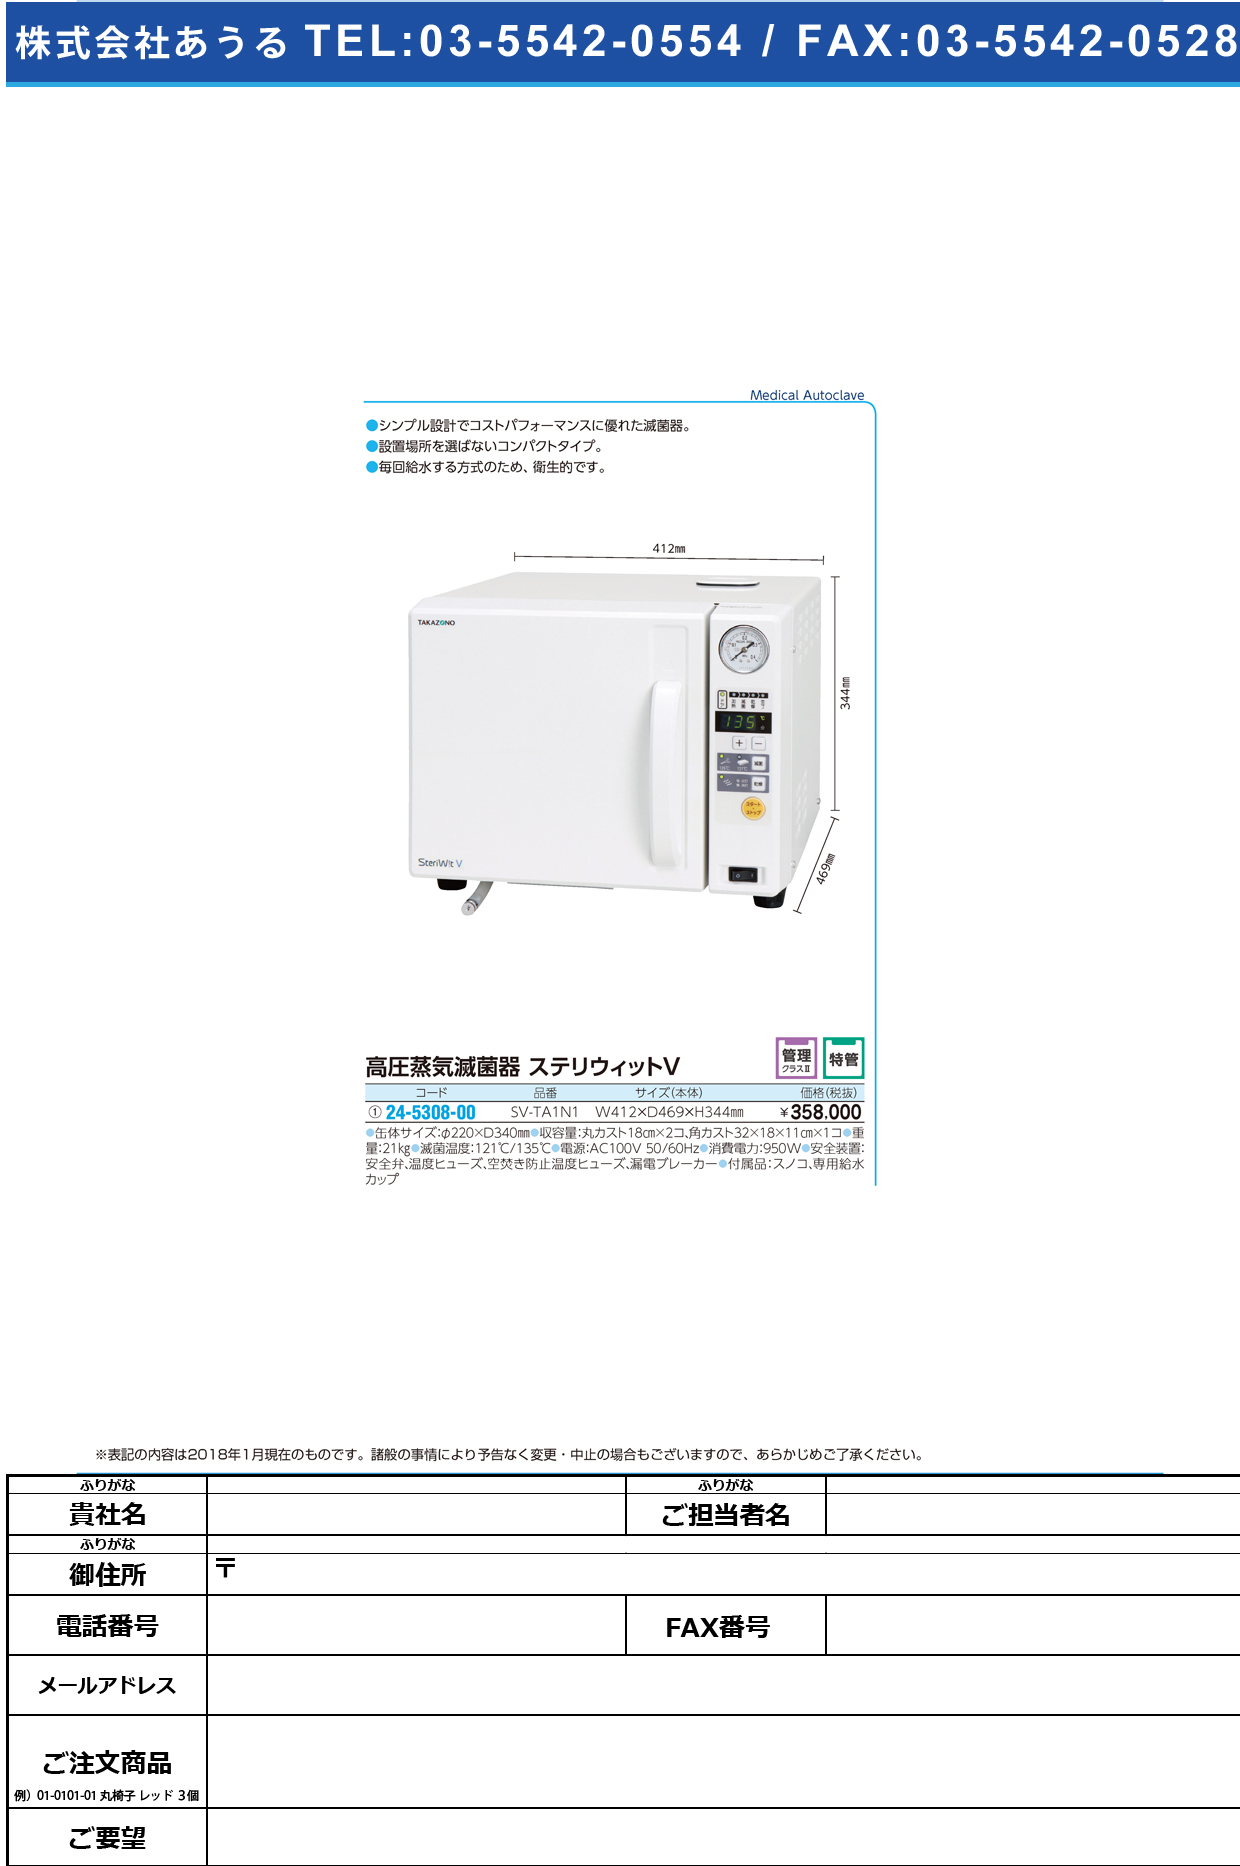 (24-5308-00)高圧蒸気滅菌器ステリウィットＶ SV-TA1N1 ｺｳｱﾂｼﾞｮｳｷﾒｯｷﾝｷｽﾃﾘｳｨｯ【1台単位】【2018年カタログ商品】